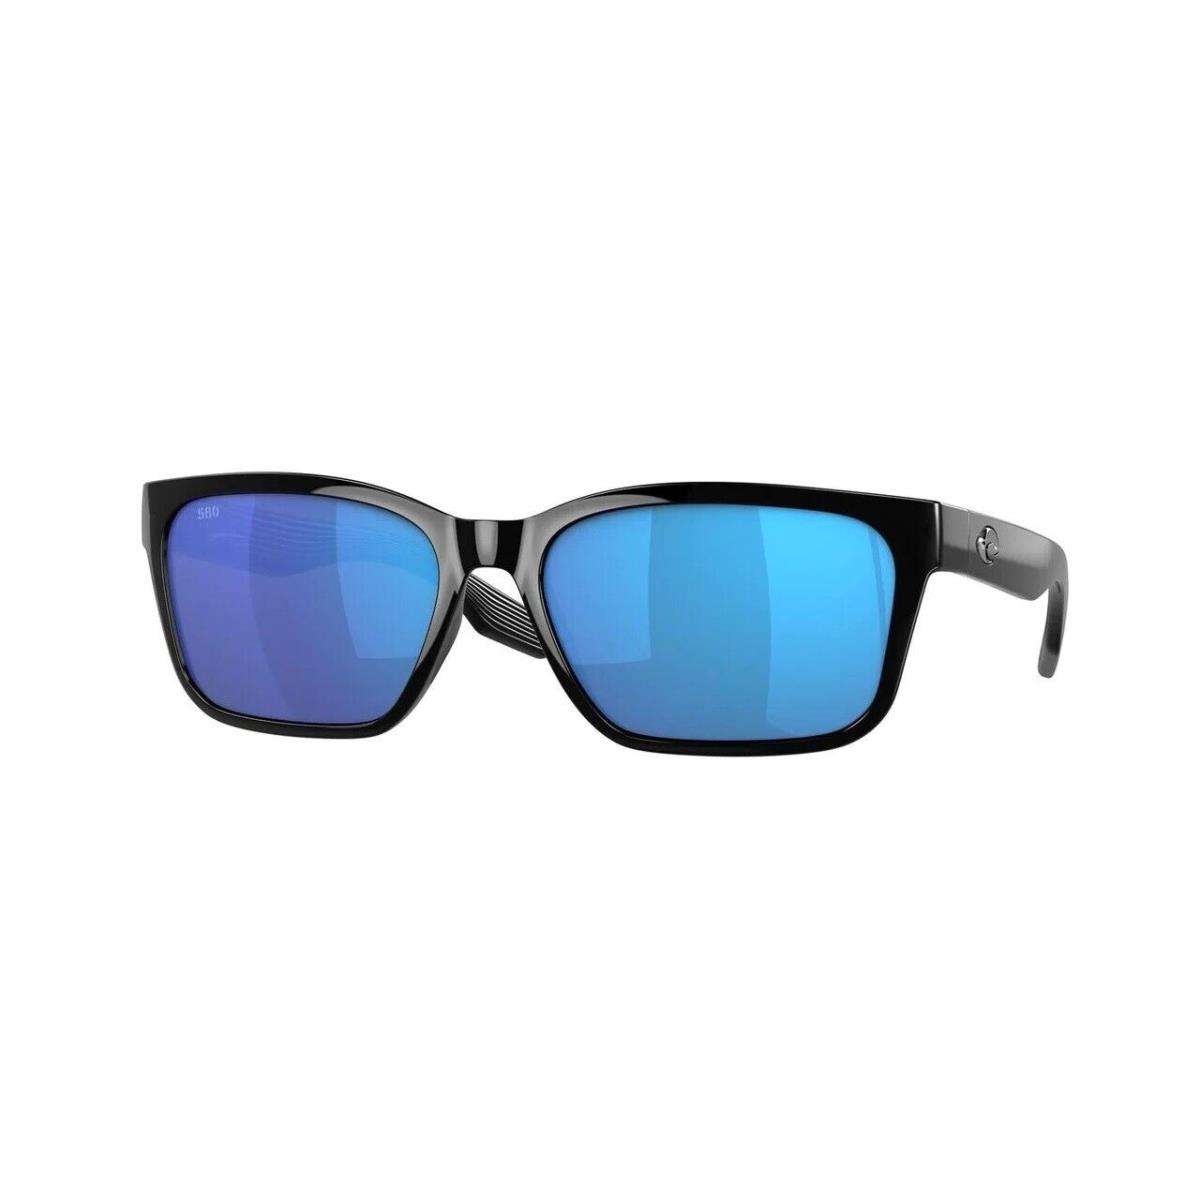 Costa Del Mar Palmas Sunglasses Black Frame w/ Blue Mirror Polarized Glass Lens